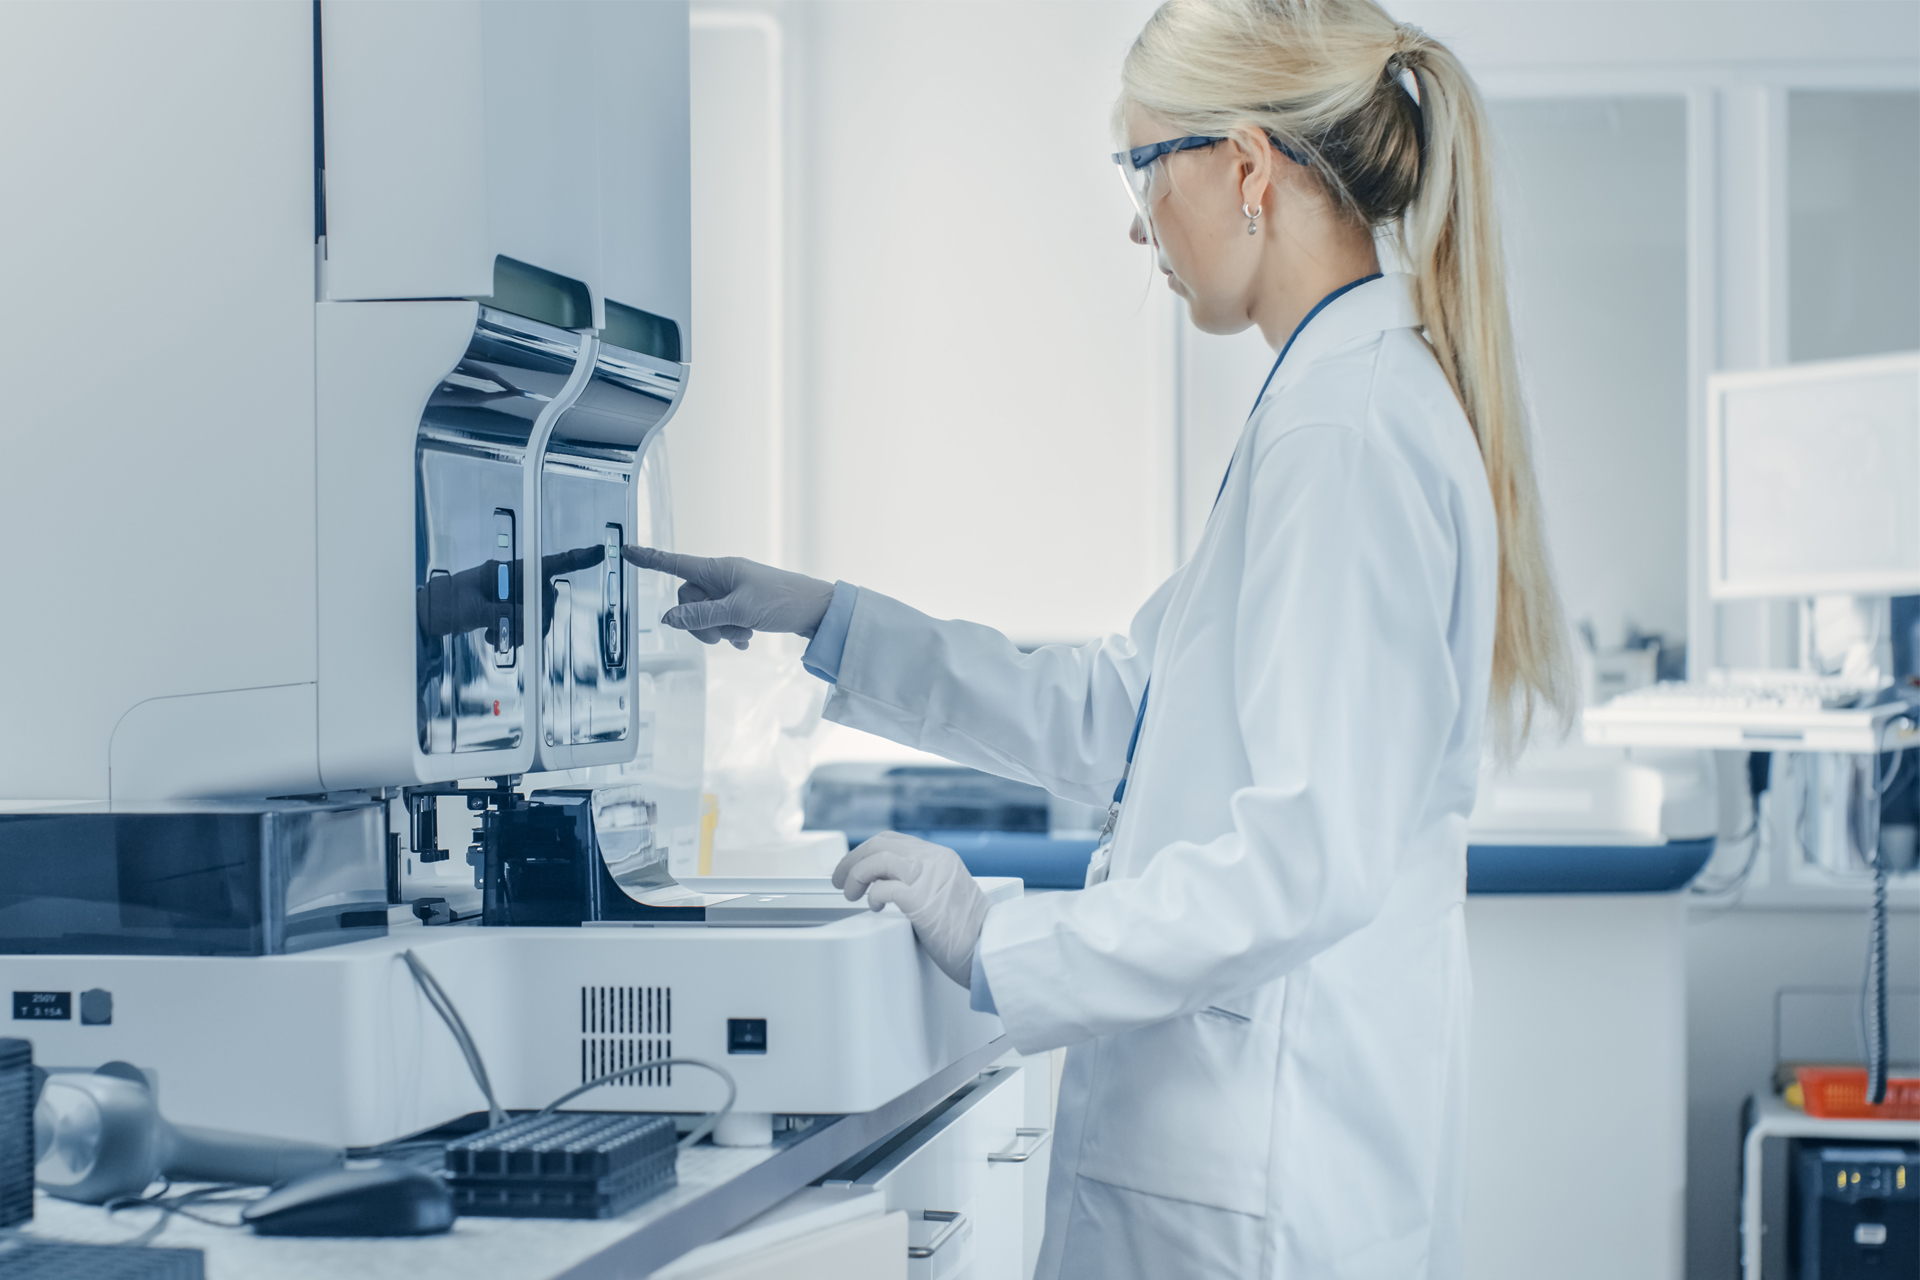 In Bio Technological Laboatory Female Research Scientist Analyze